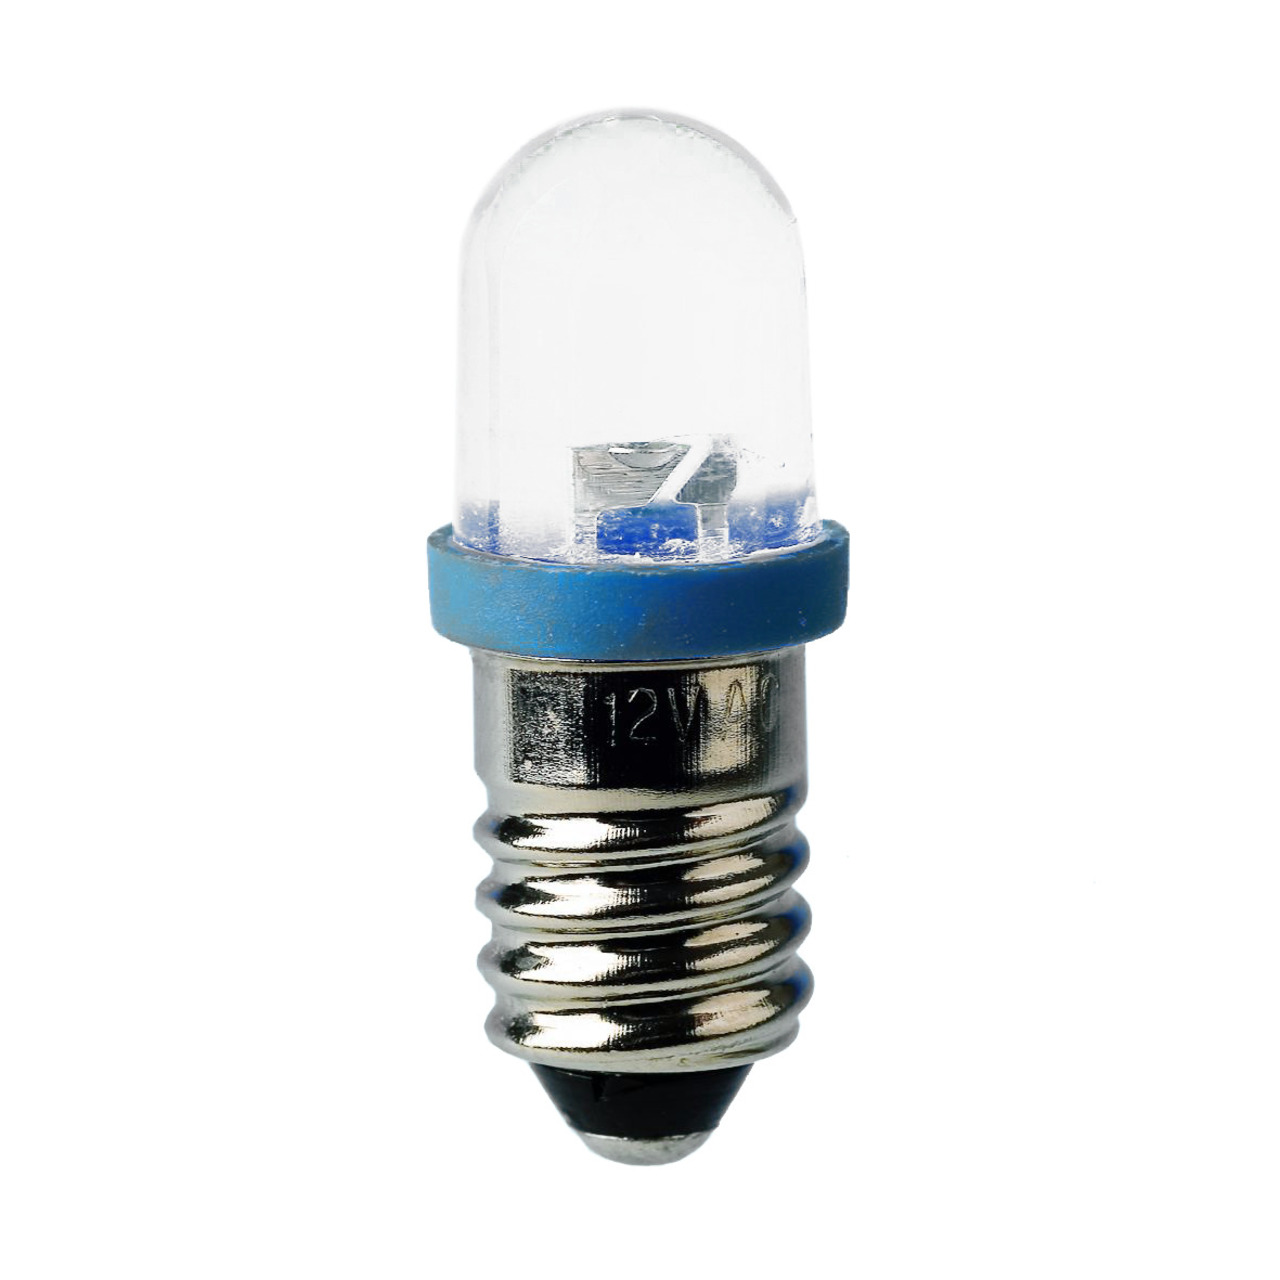 Barthelme LED-Lampe E10 mit Brückengleichrichter- 10 x 28 mm- 230 V- warmweiss unter Komponenten